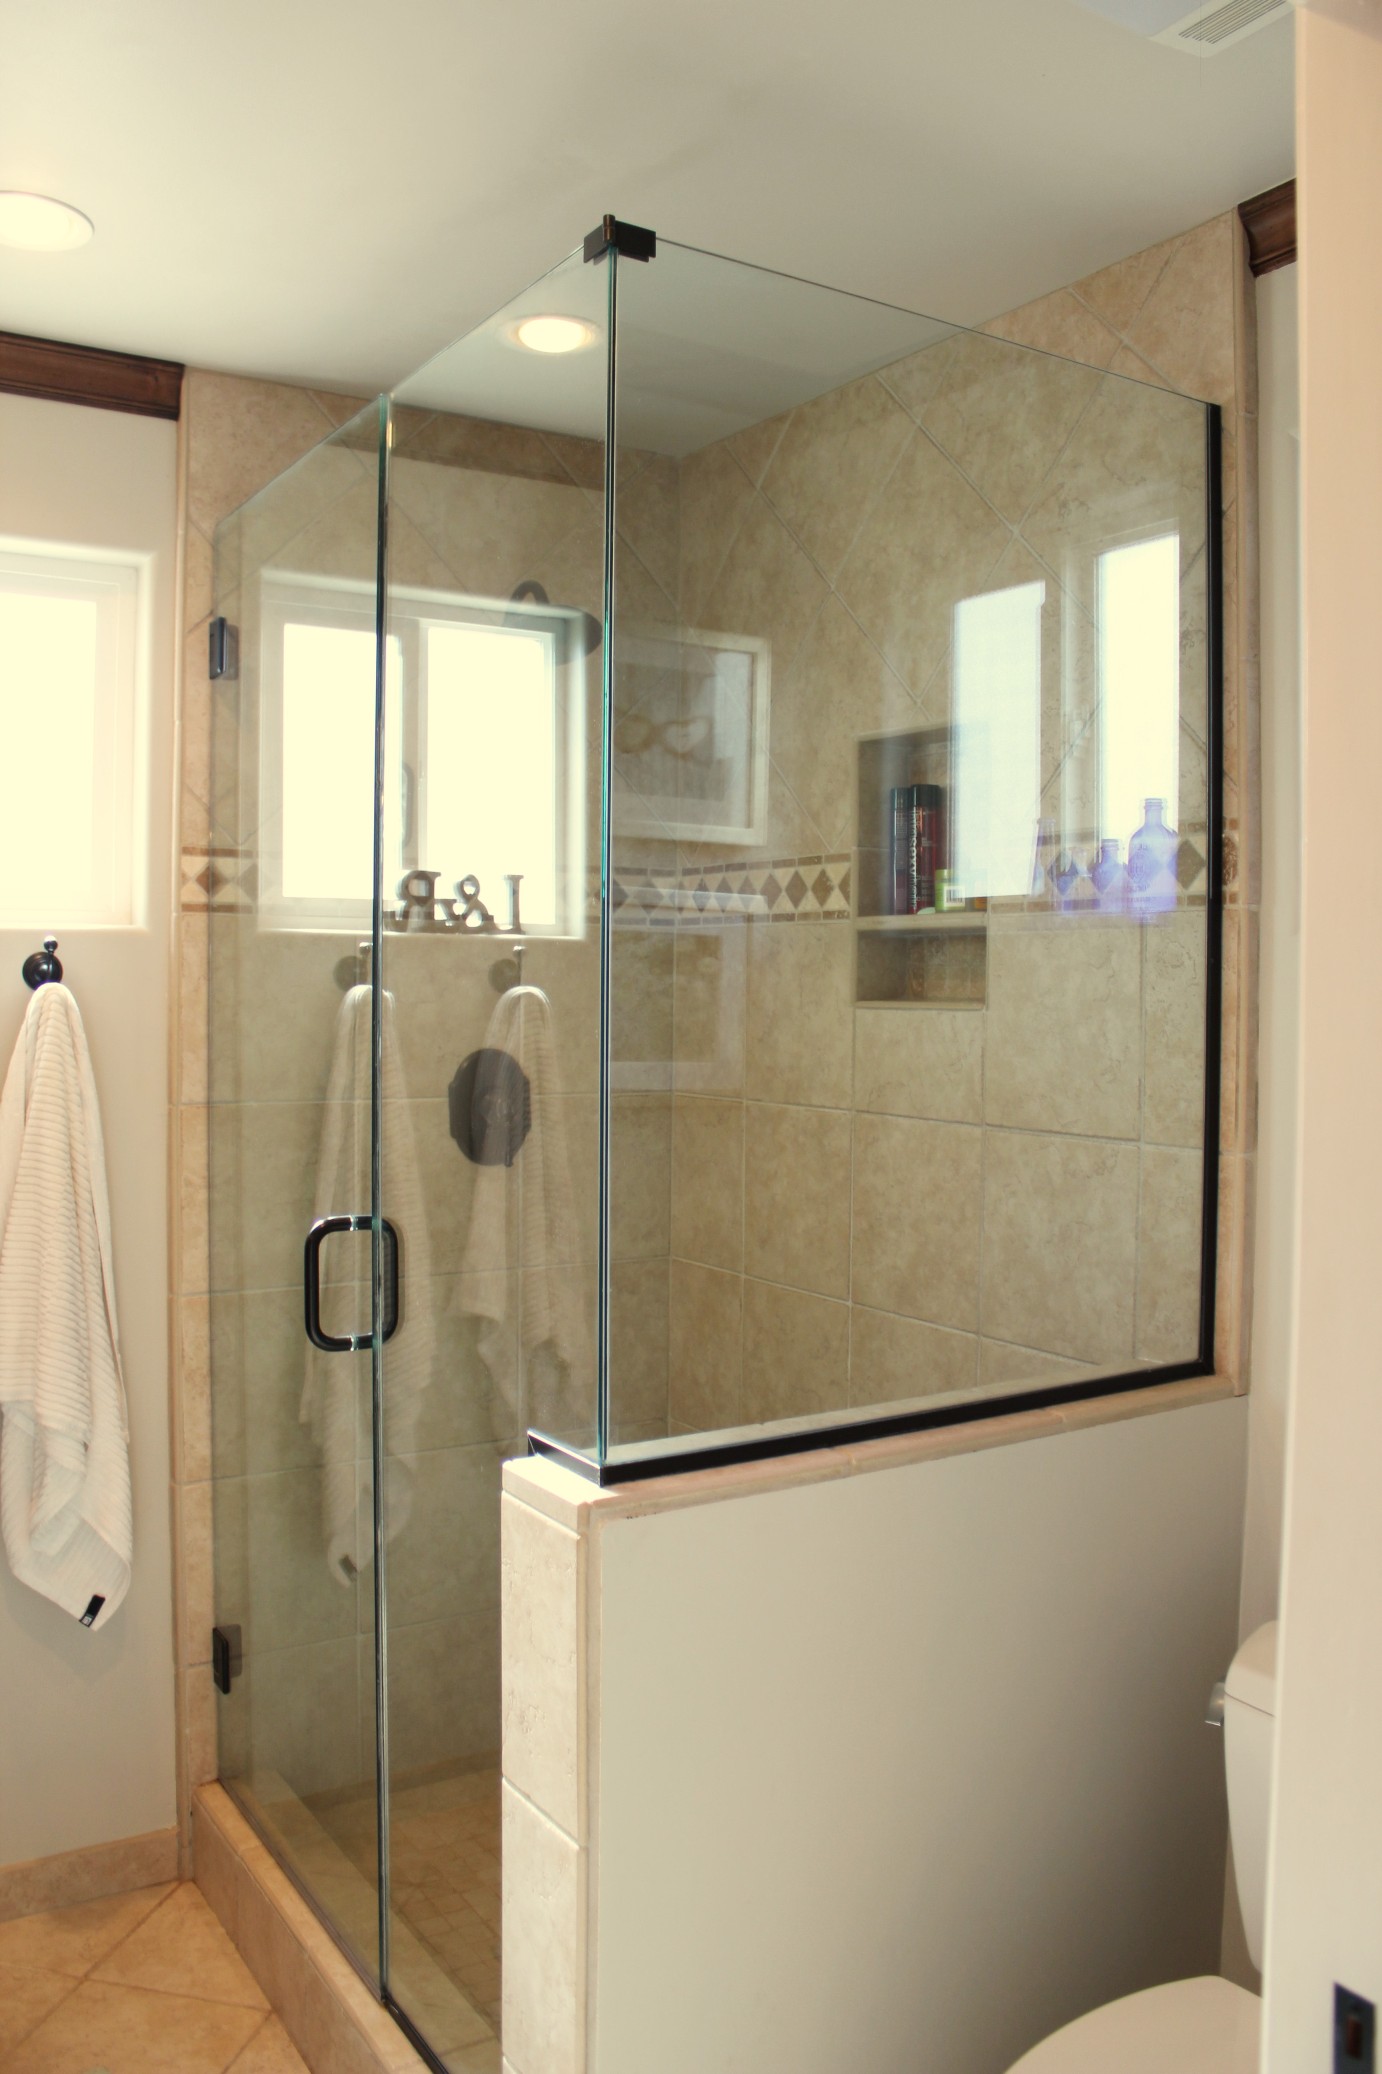 bathroom hardware sets BATHROOM DECOR | BATH FURNITURE ACCESSORIES | HOMEDECORATORS.COM.